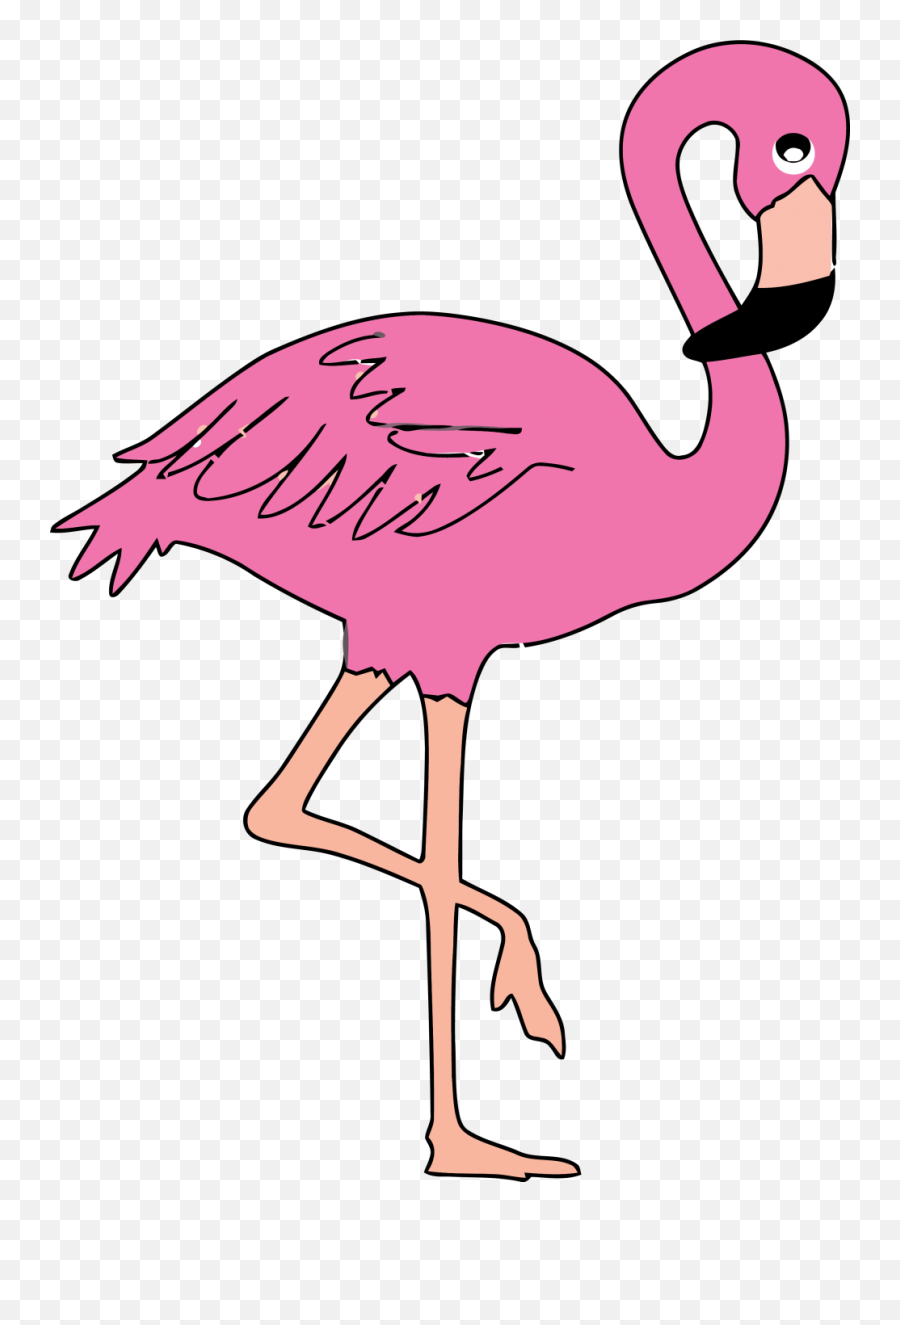 Download Hd Collection Of High Quality - Imagen De Un Flamingo Png,Flamingo Transparent Background